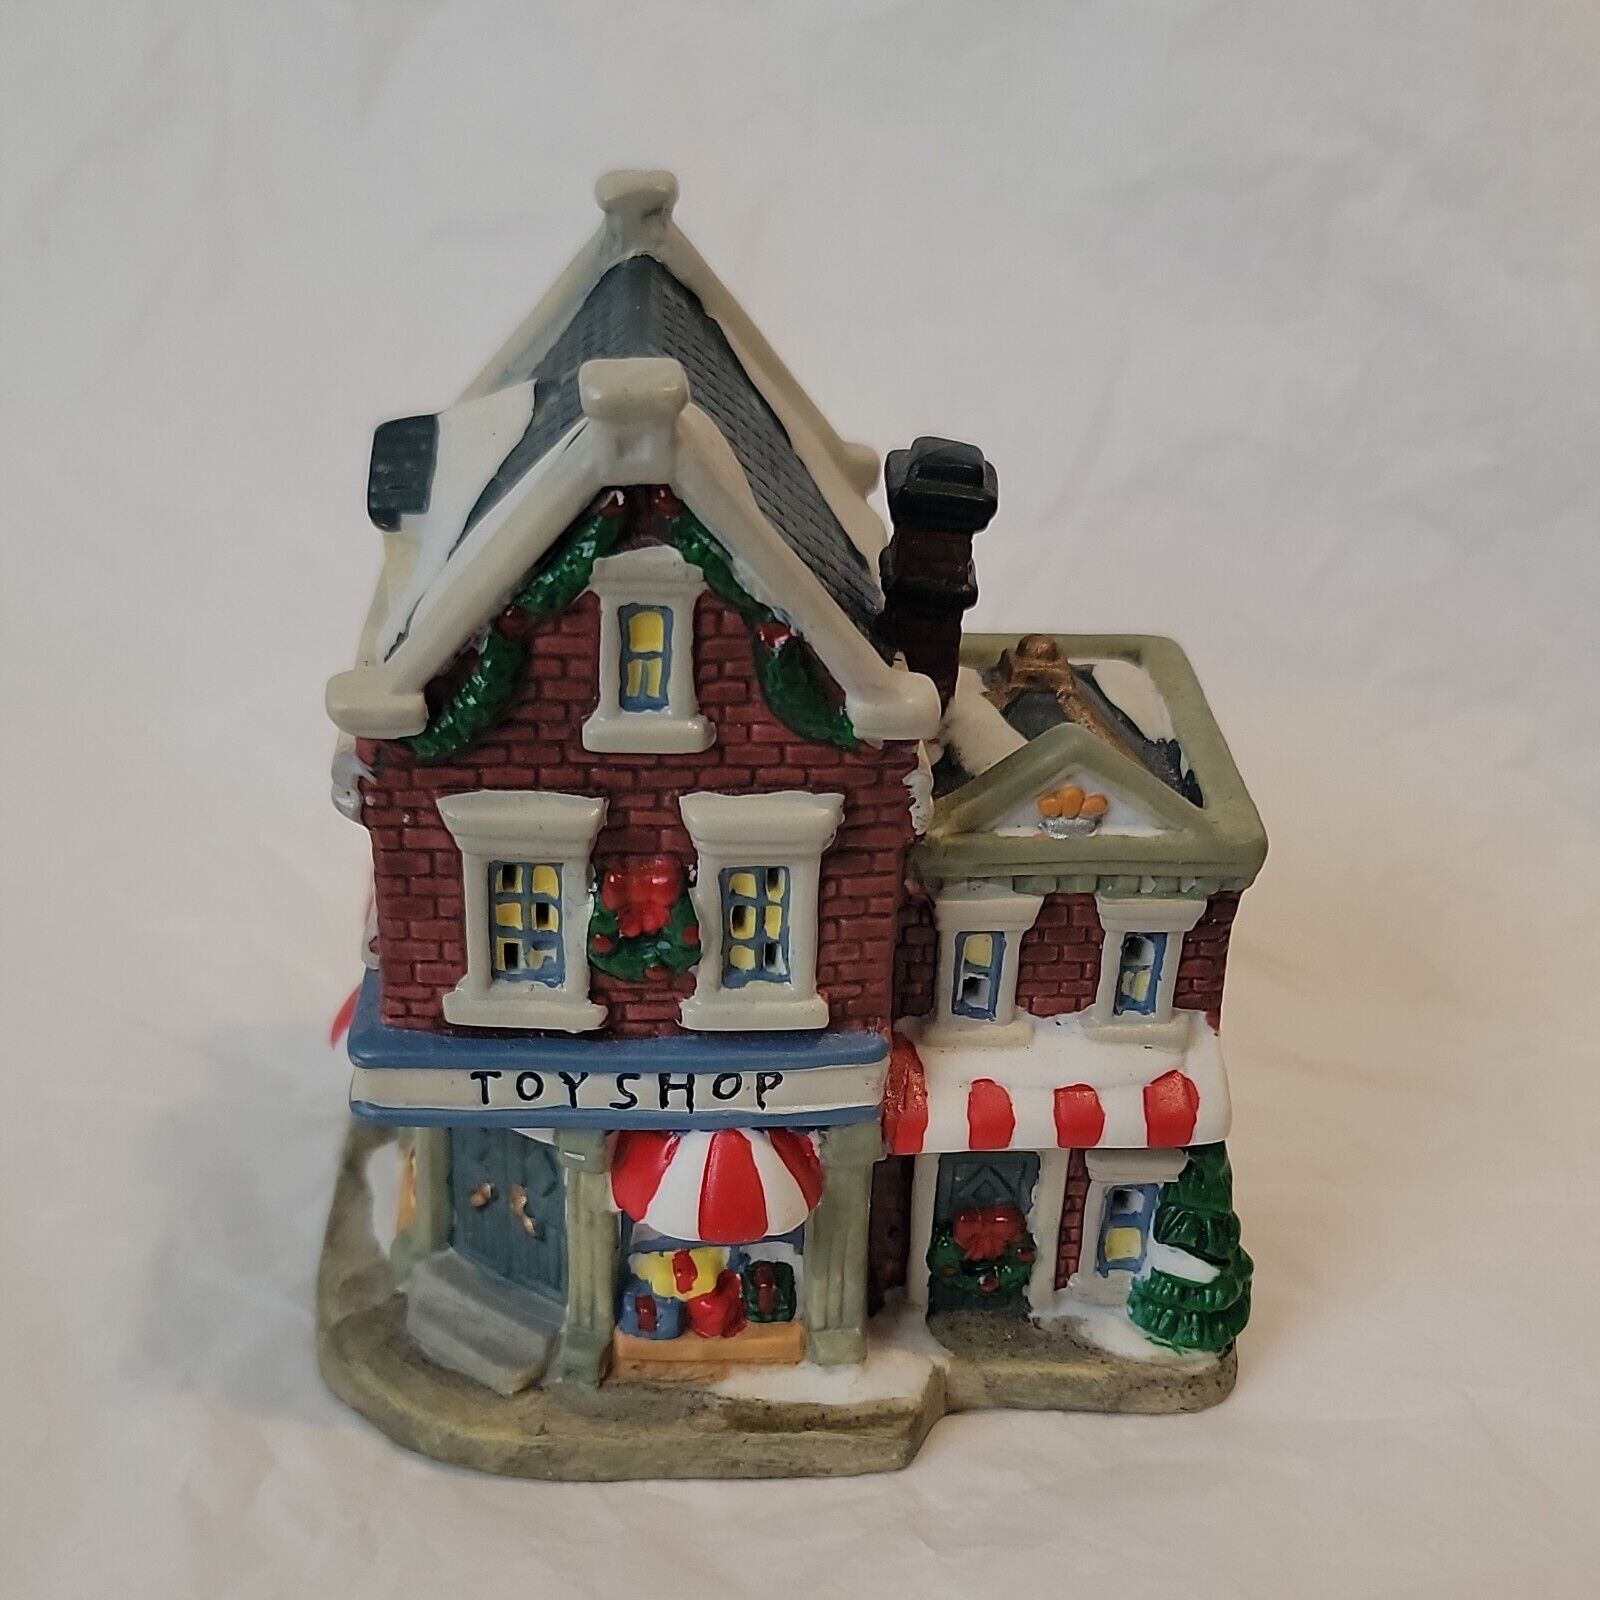 Wellington Square Christmas Village Toy Shop Ceramic Holiday Village Decoration